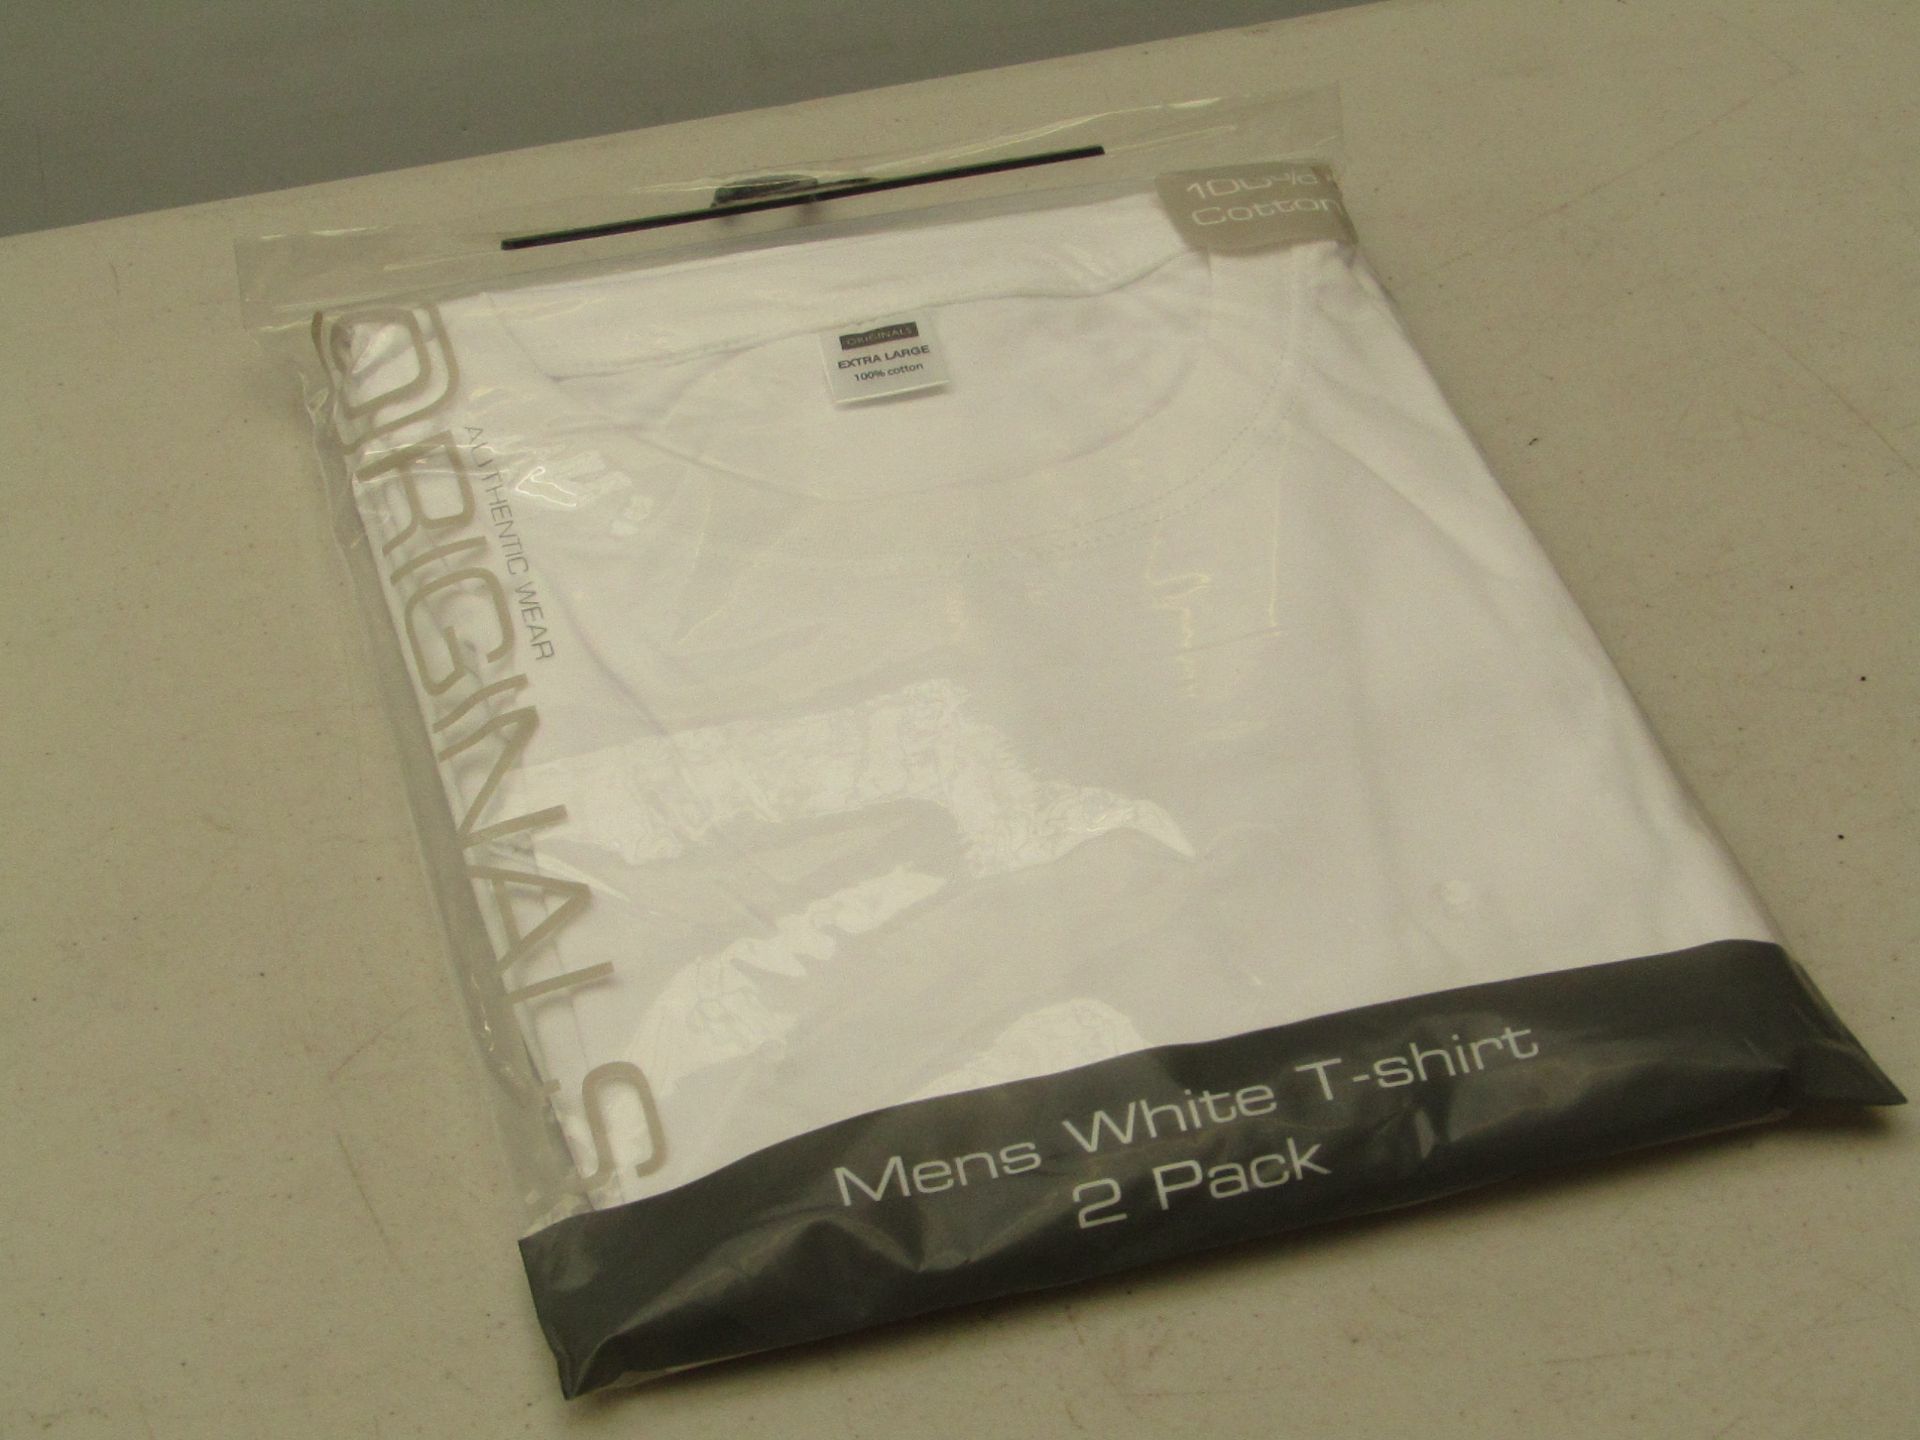 Originals XL 100% cotton mens white t-shirt 2 pack.